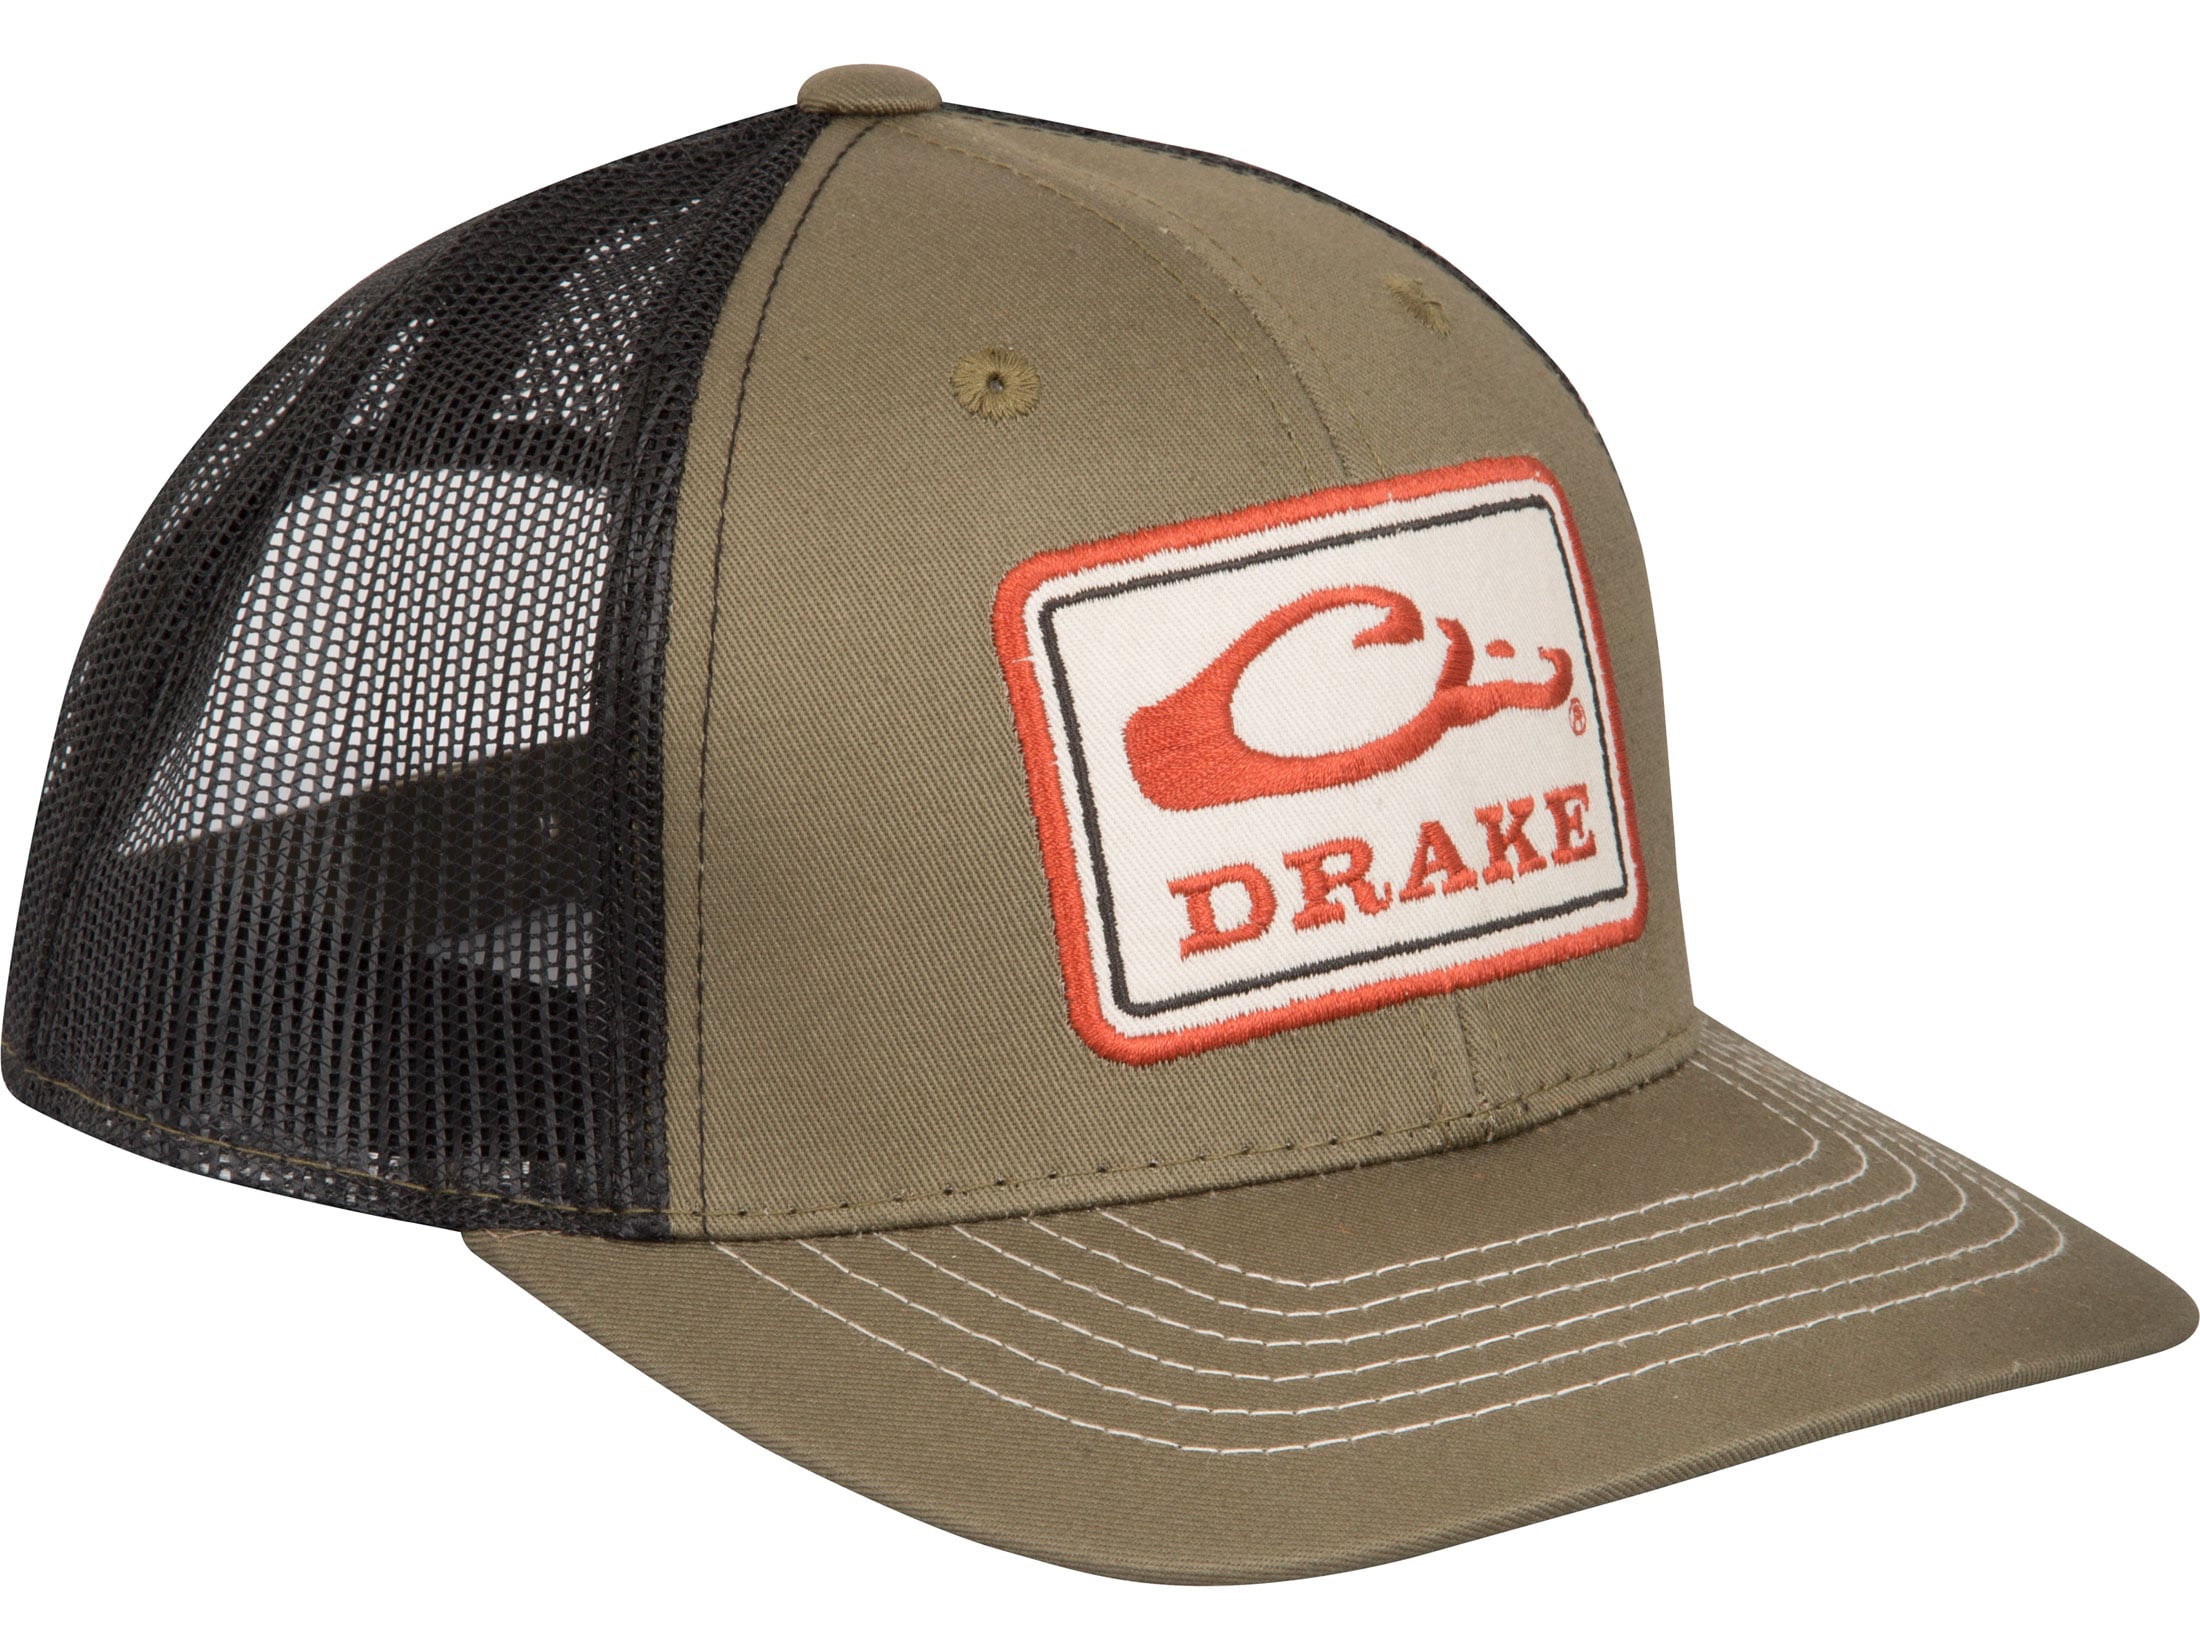 Drake Square Patch Mesh Back Hat Charcoal/Black